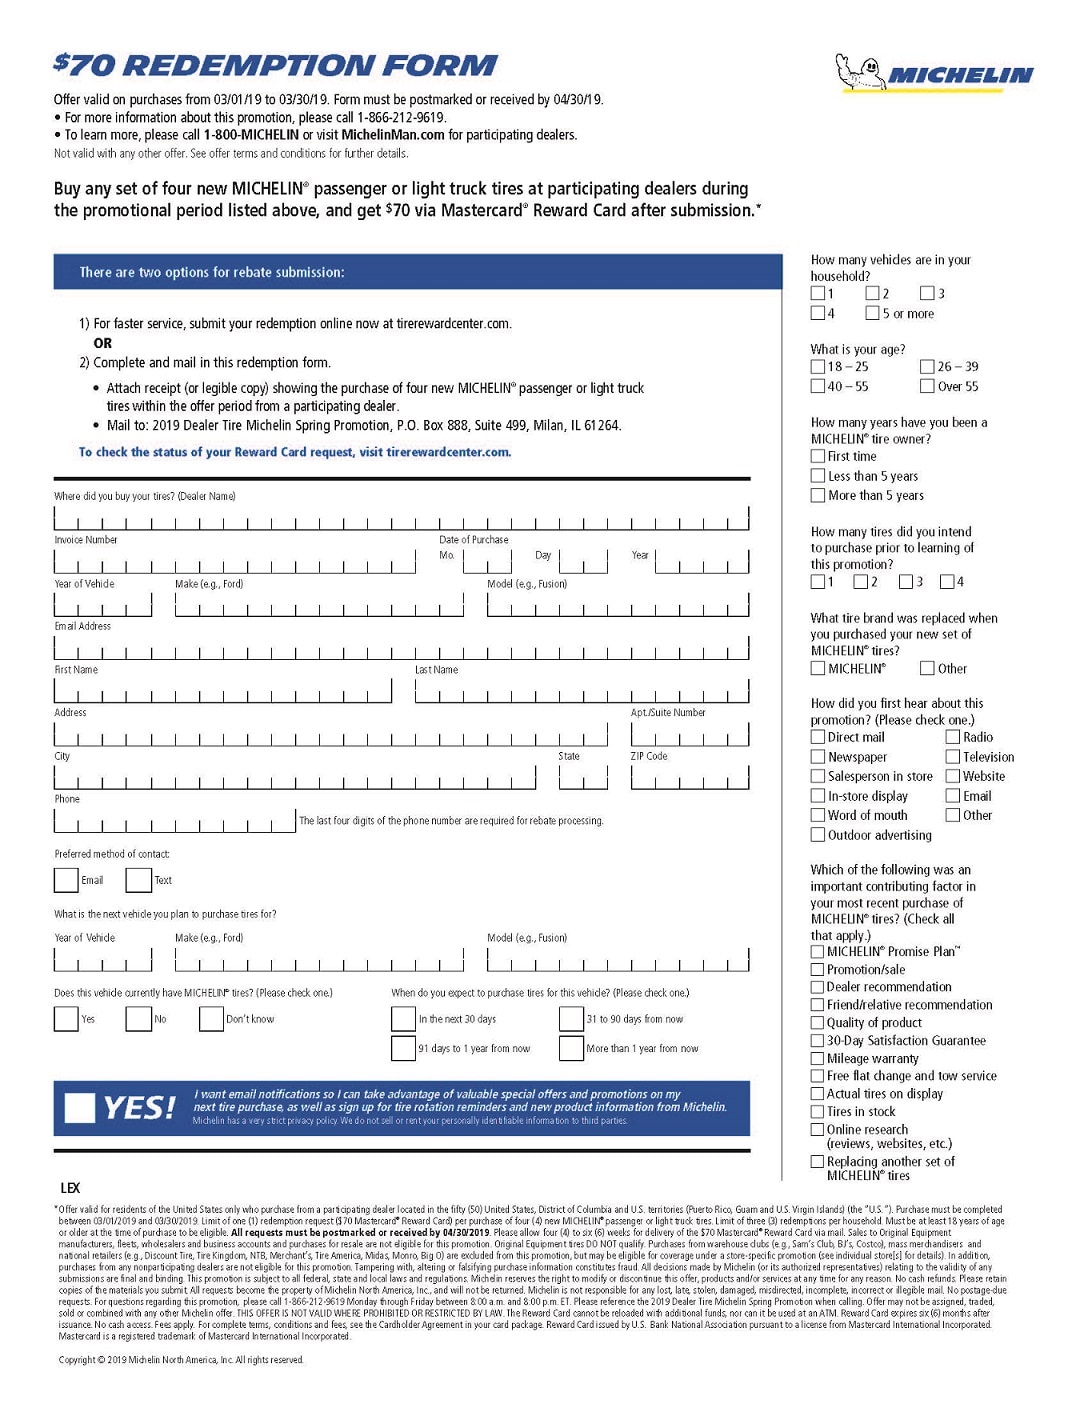 michelin-rebate-form-pdf